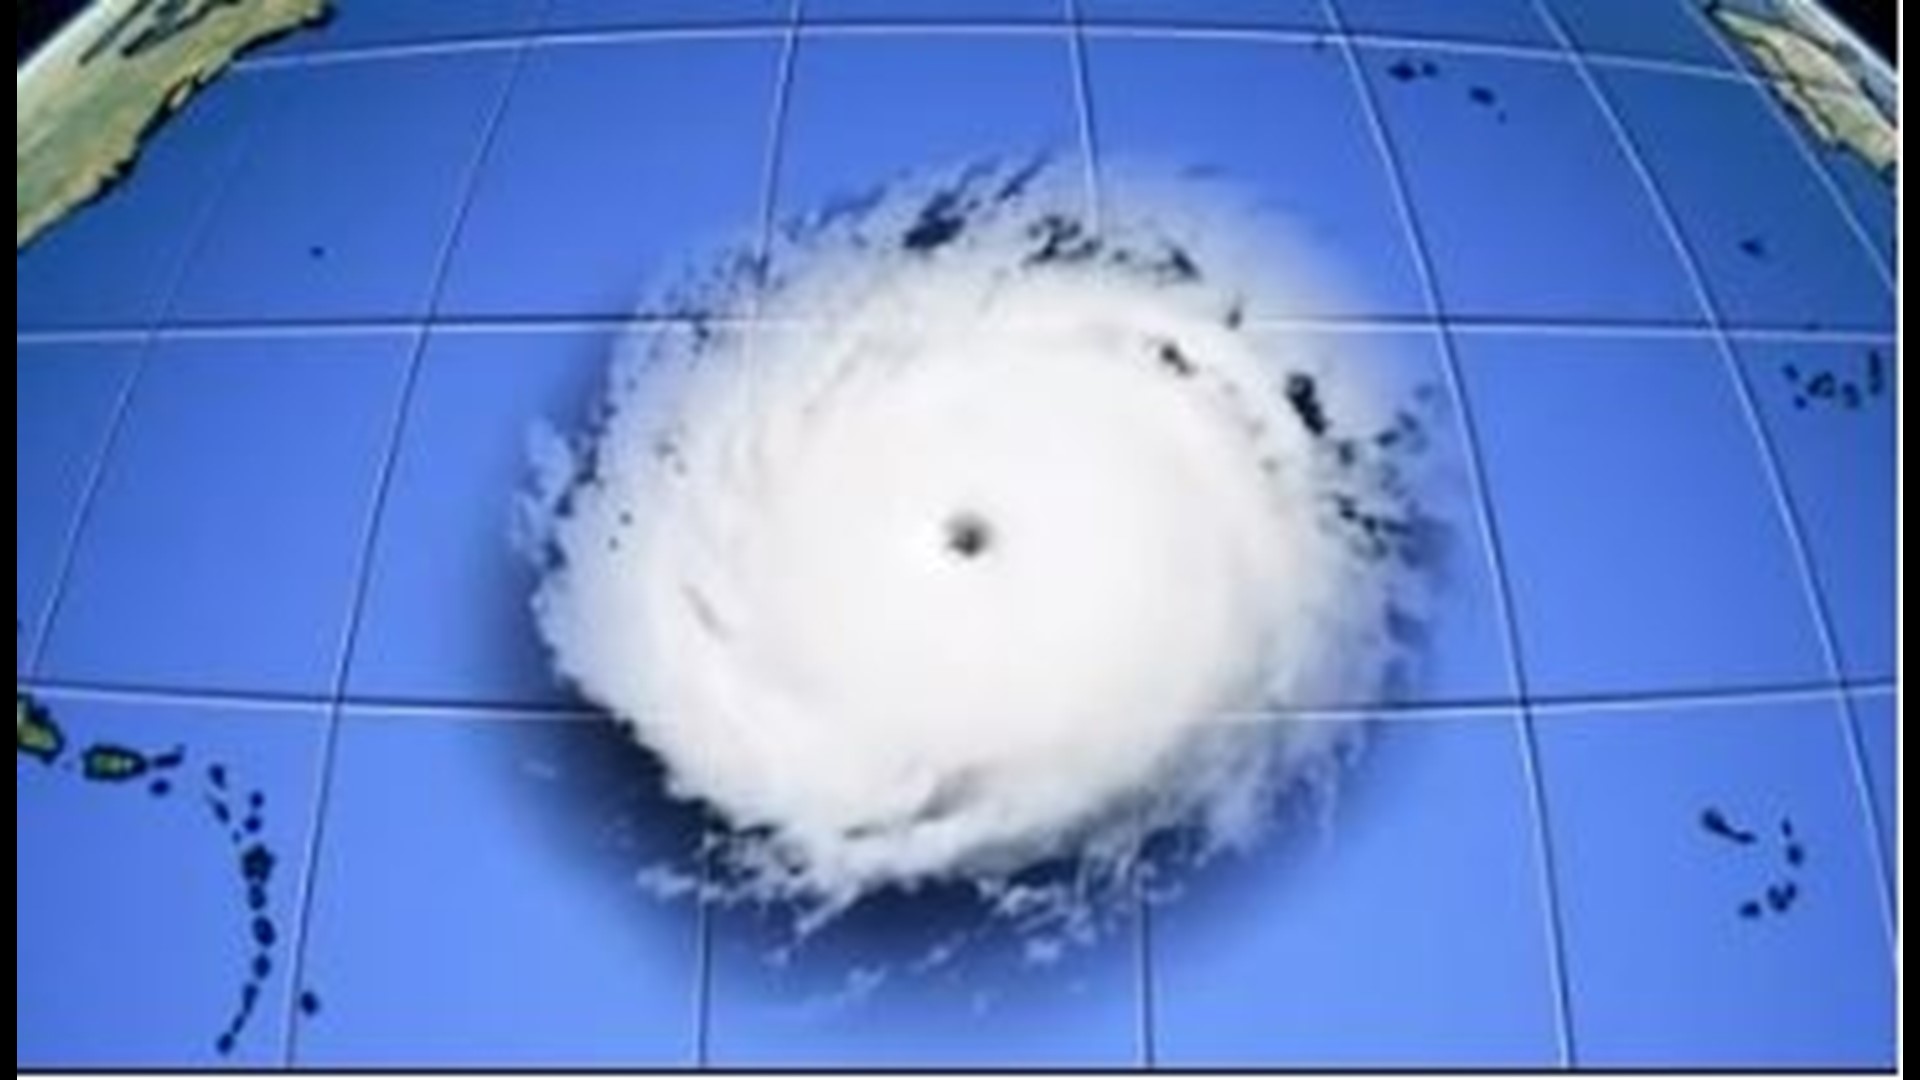 KHOU 11 Chief Meteorologist David Paul explains the Coriolis effect.